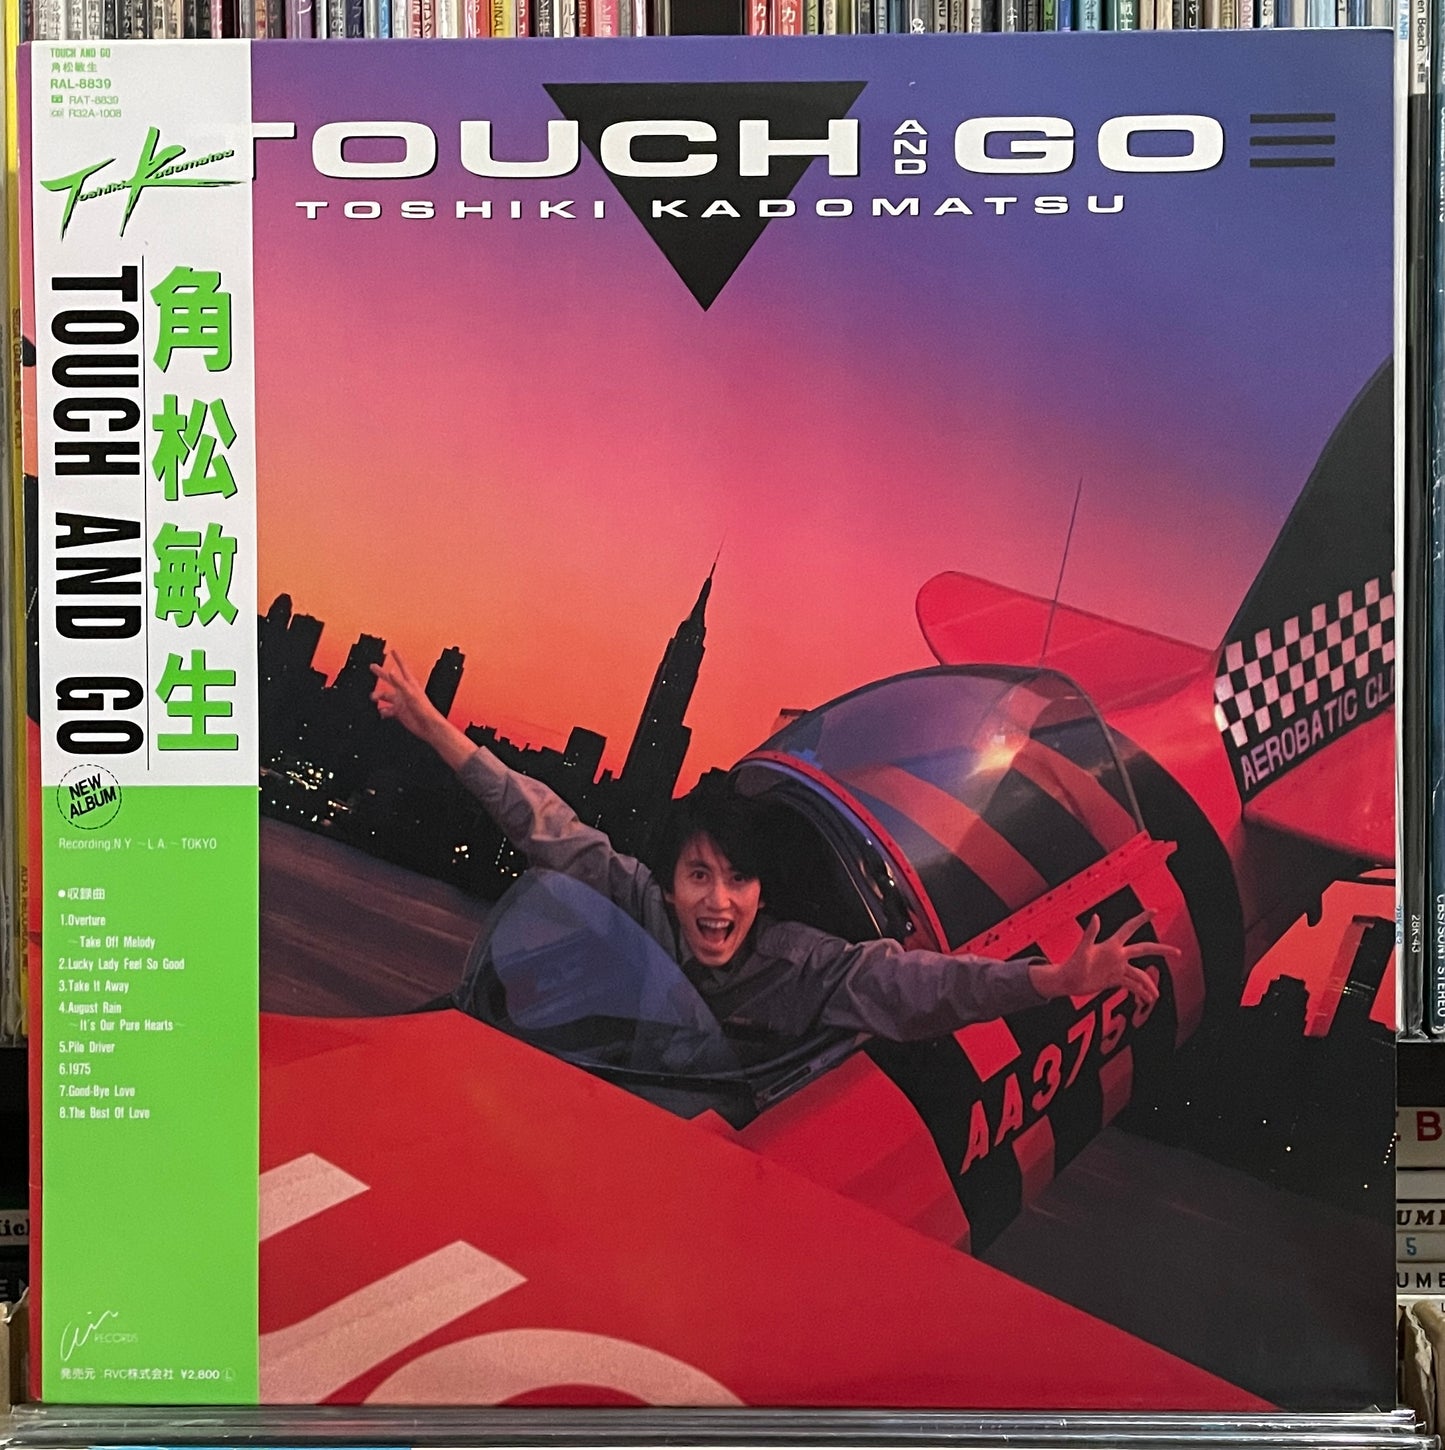 Toshiki Kadomatsu “Touch & Go” (1986)